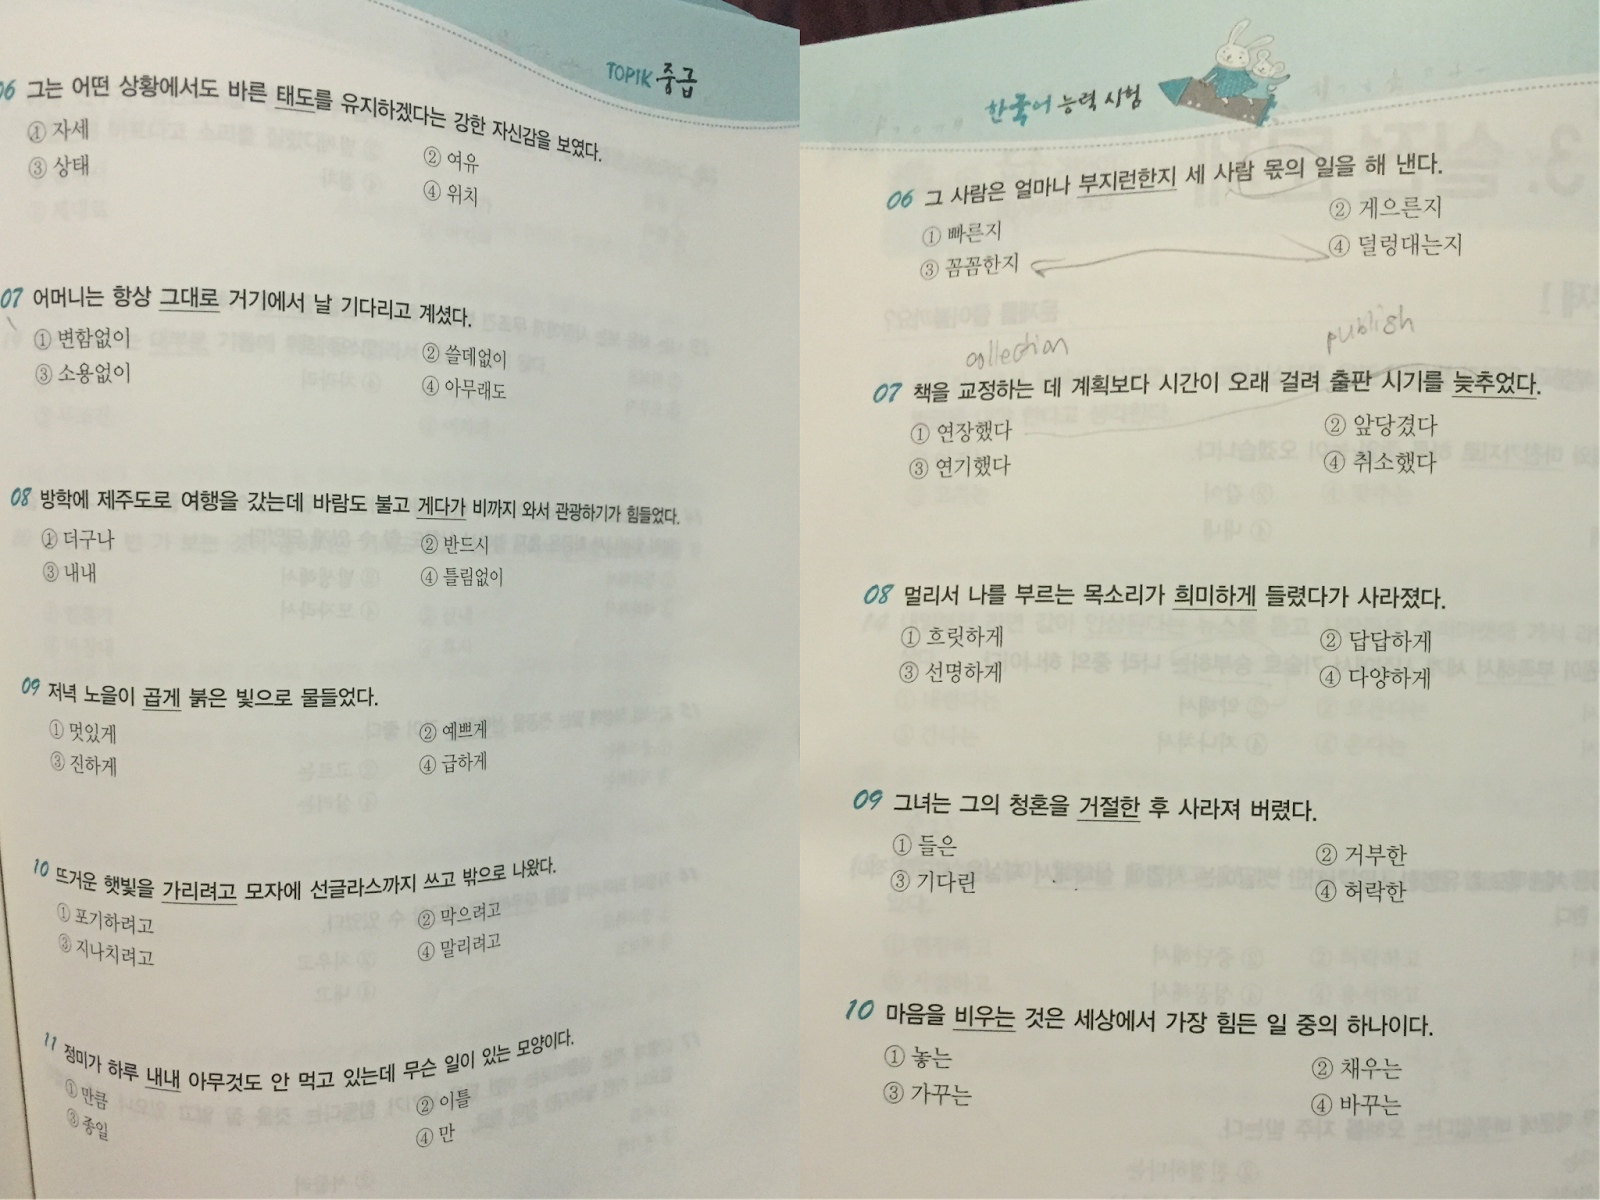 Rahasia kecanggihan Bahasa Korea gue adalah vocab Writing gue paling tinggi di TOPIK cuma tapi itu ga penting Yang penting vocab lu canggih